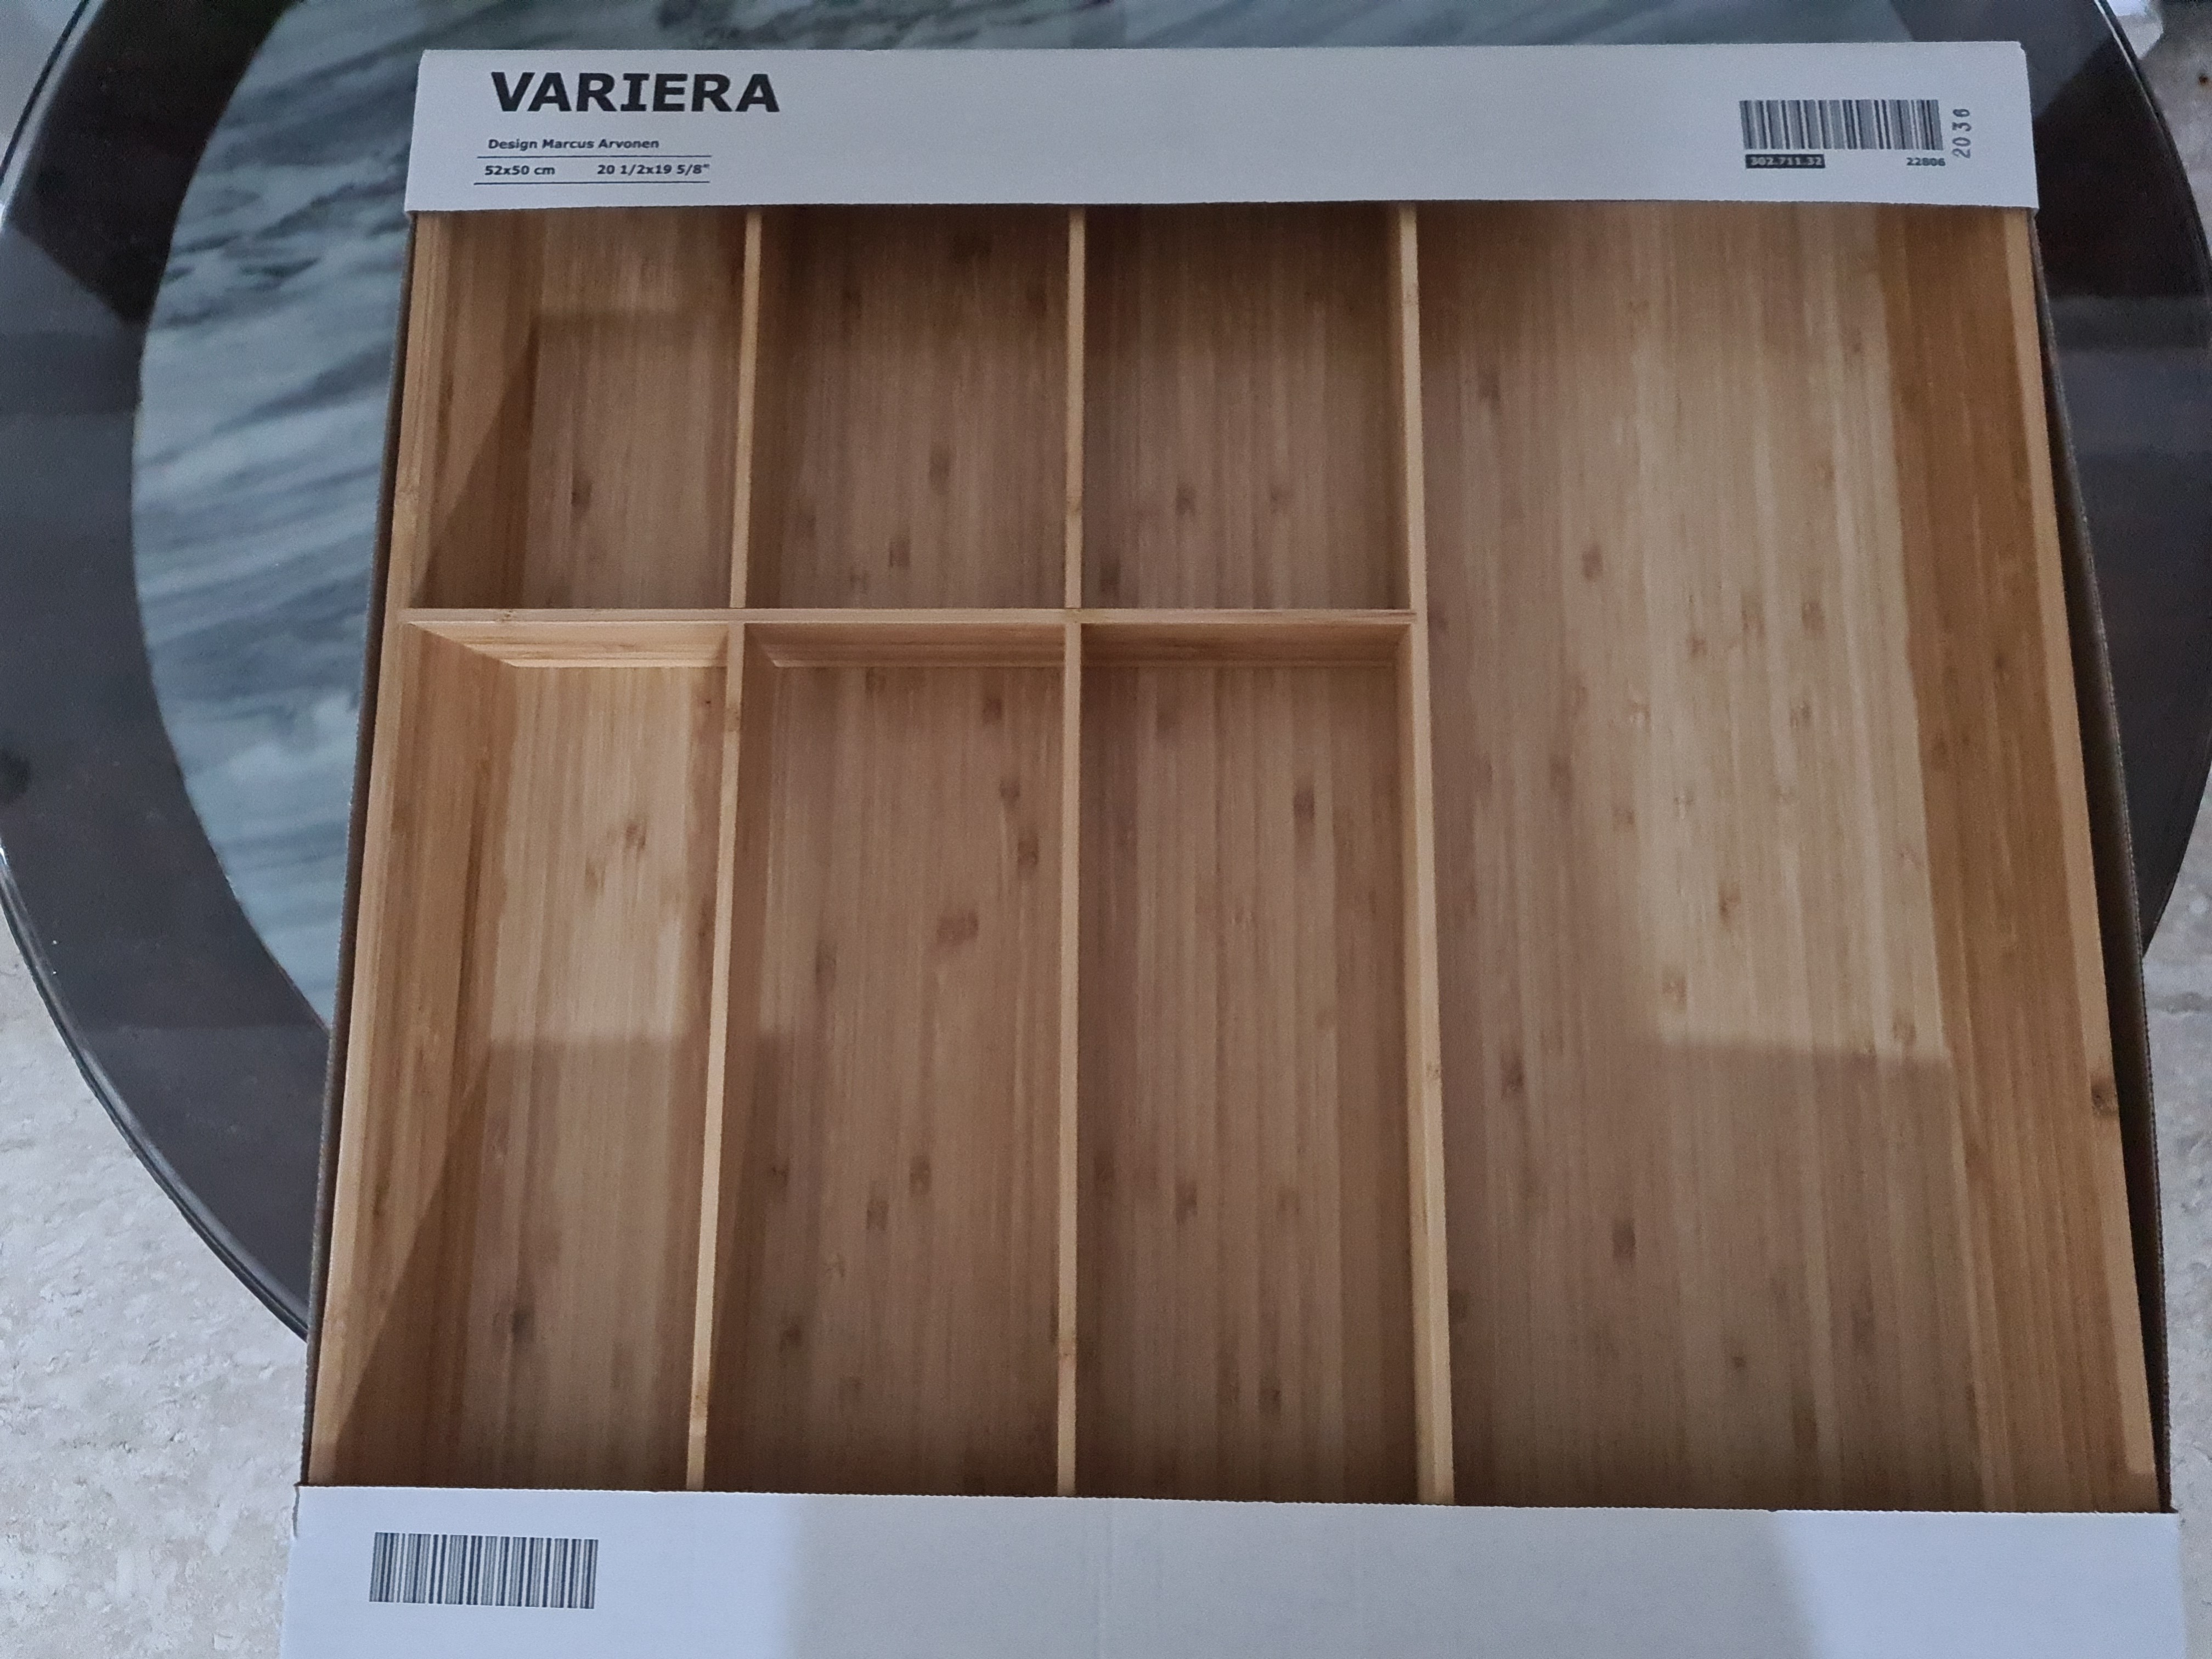 IKEA Variera 22806 - Wood Knife Tray Drawer Organizer 20 x 6 x 2